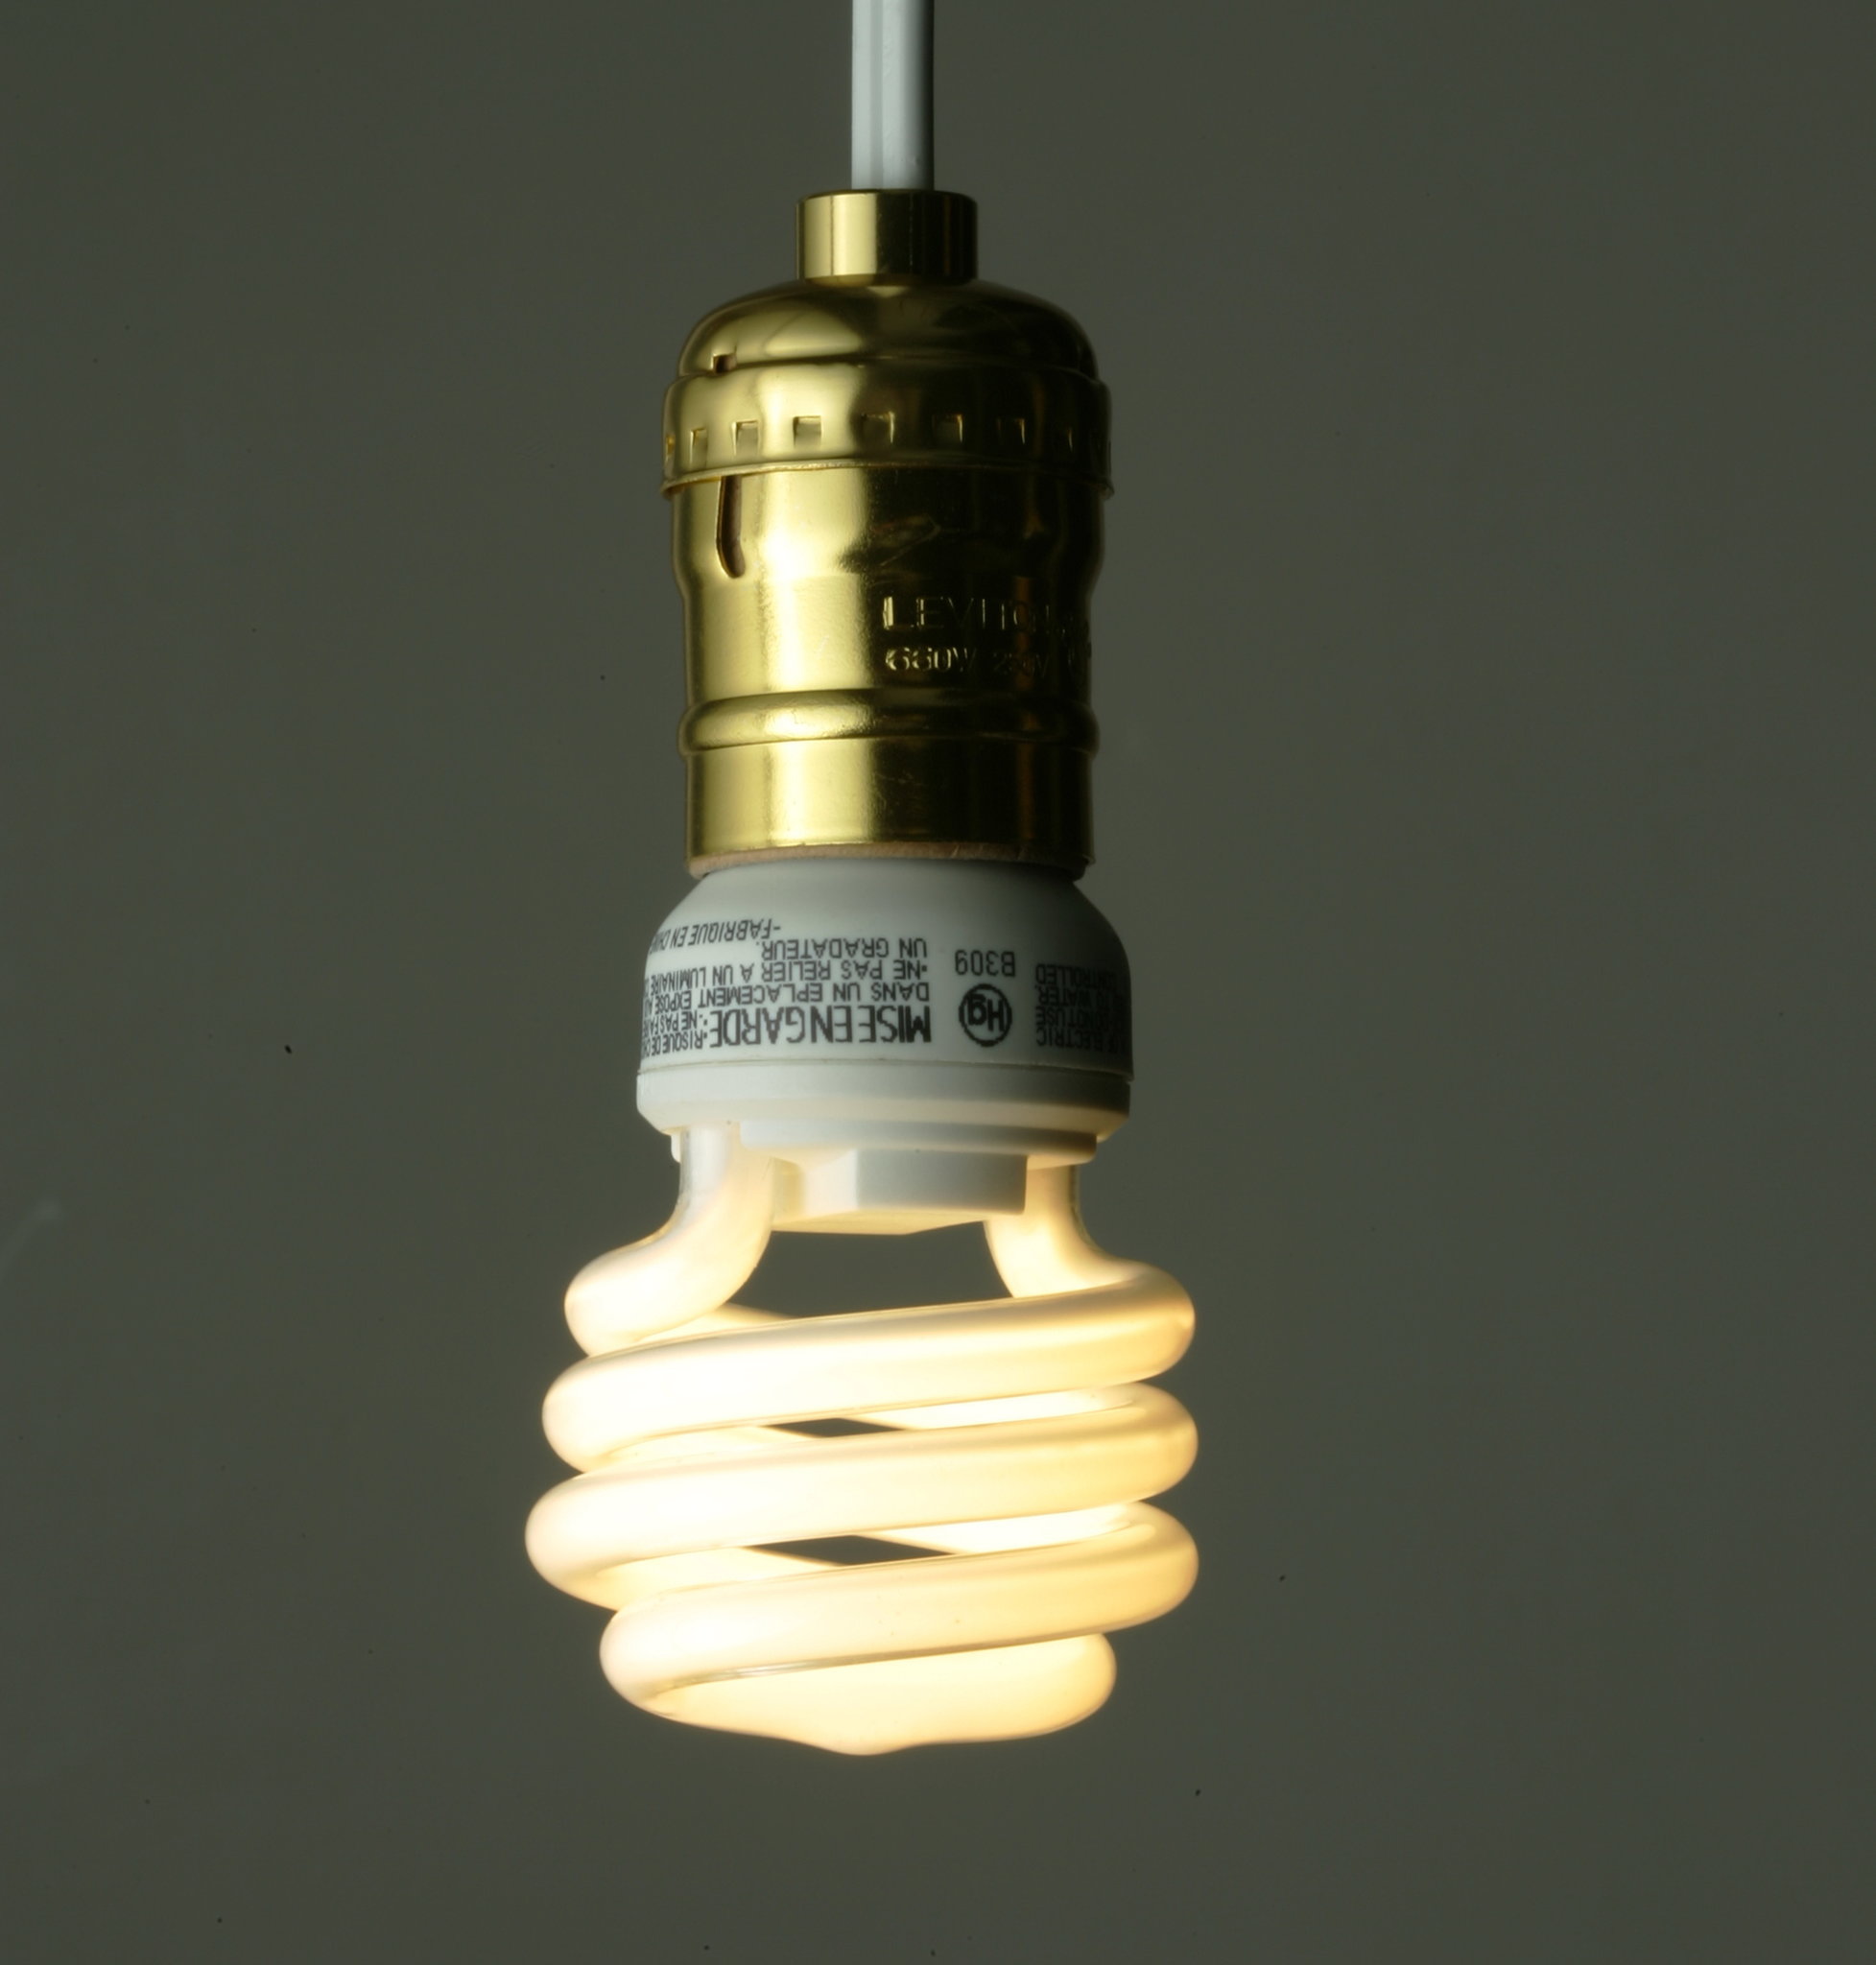 Types of Light Bulbs